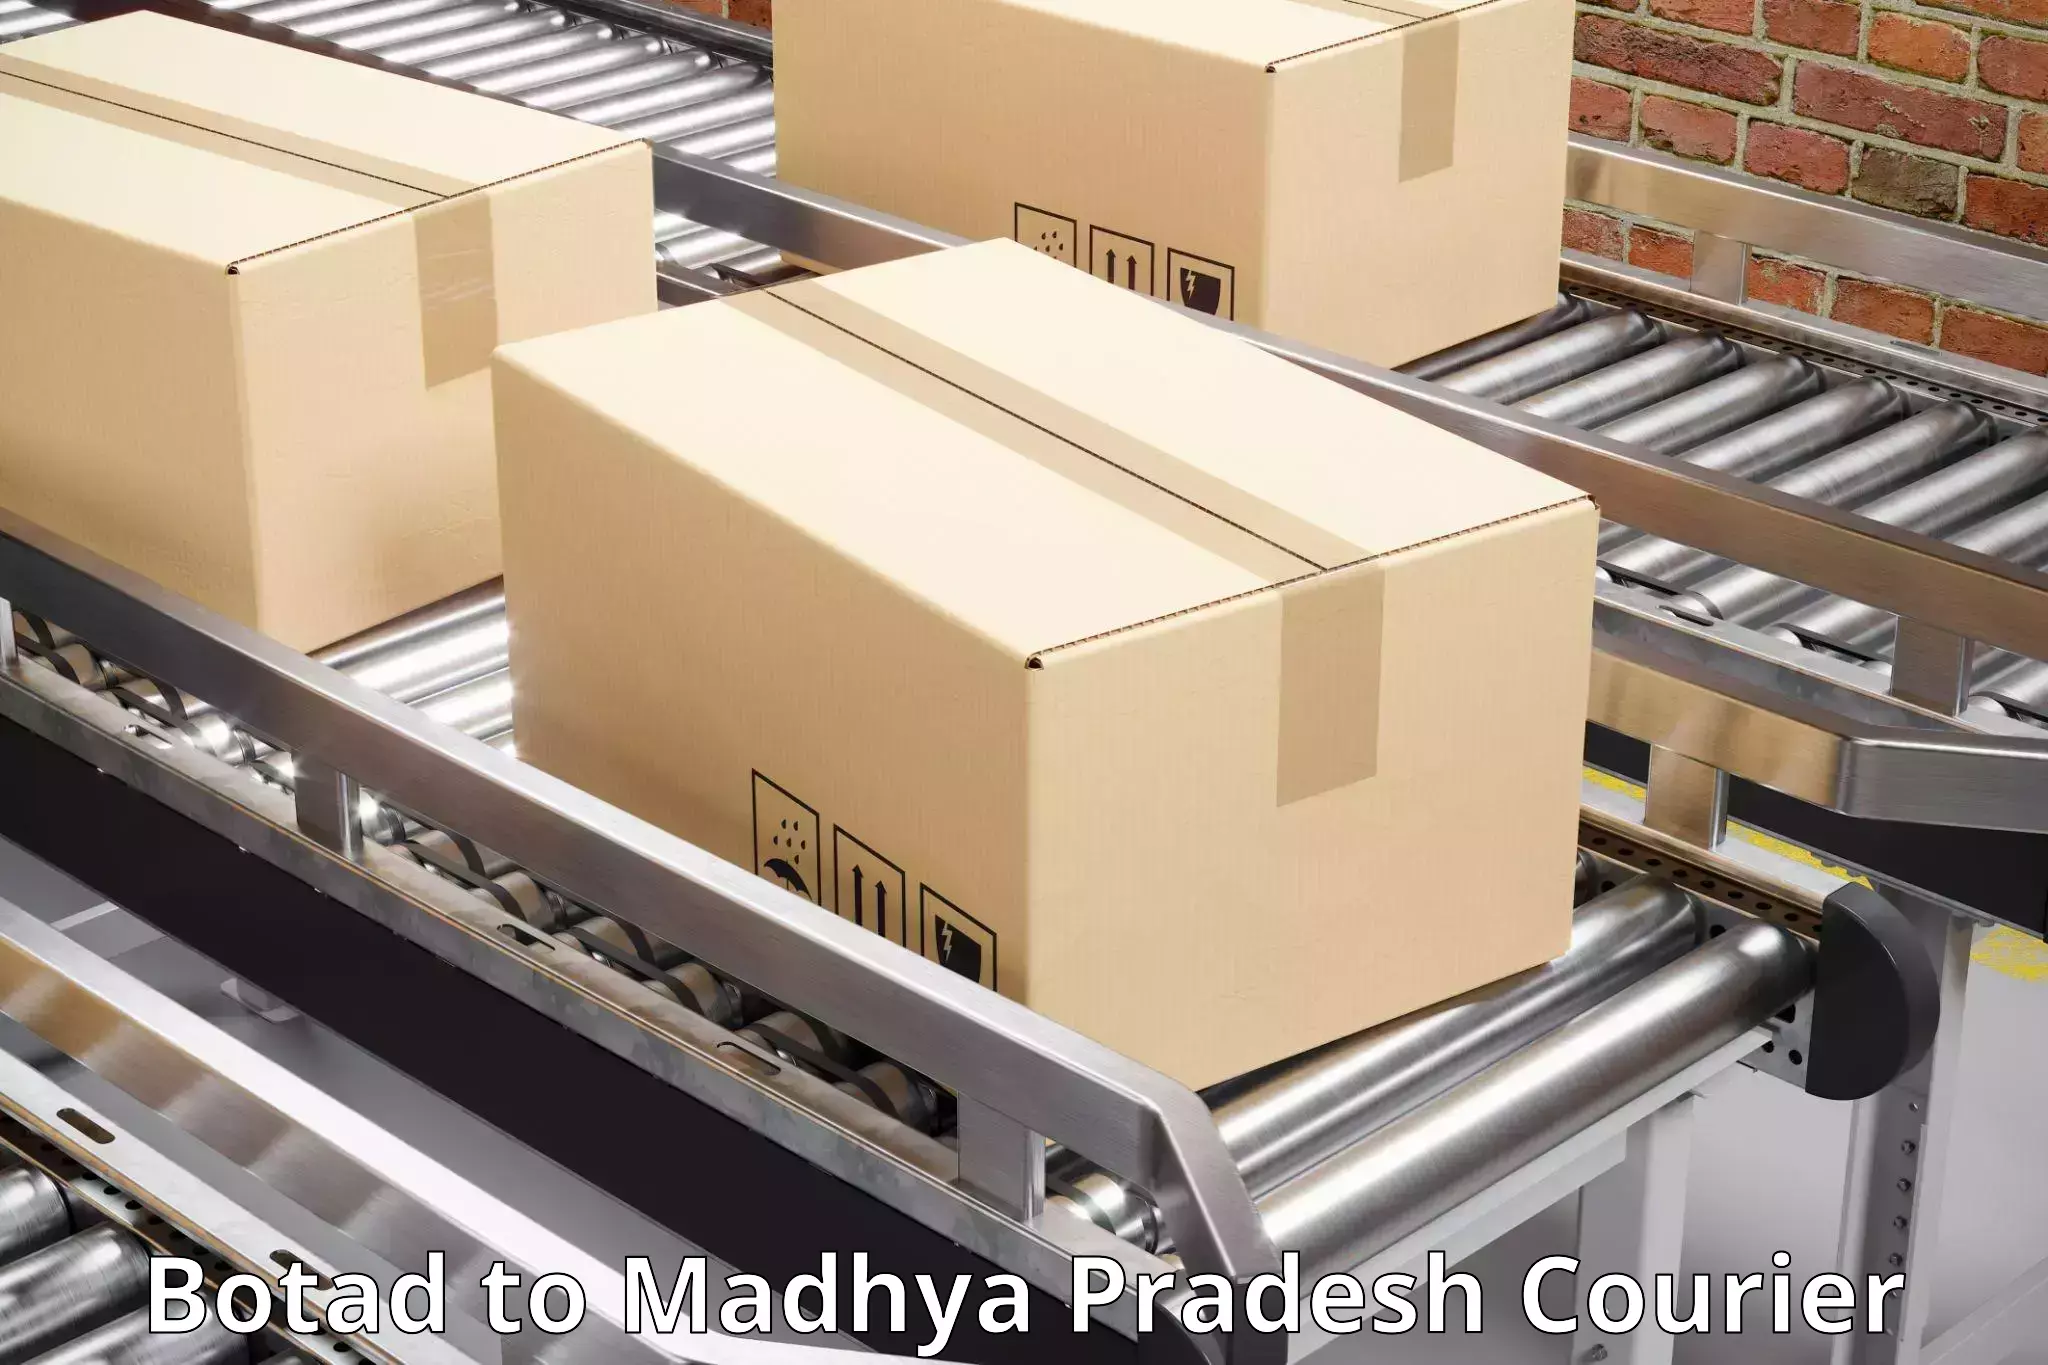 Package delivery network Botad to Raipur Karchuliyan